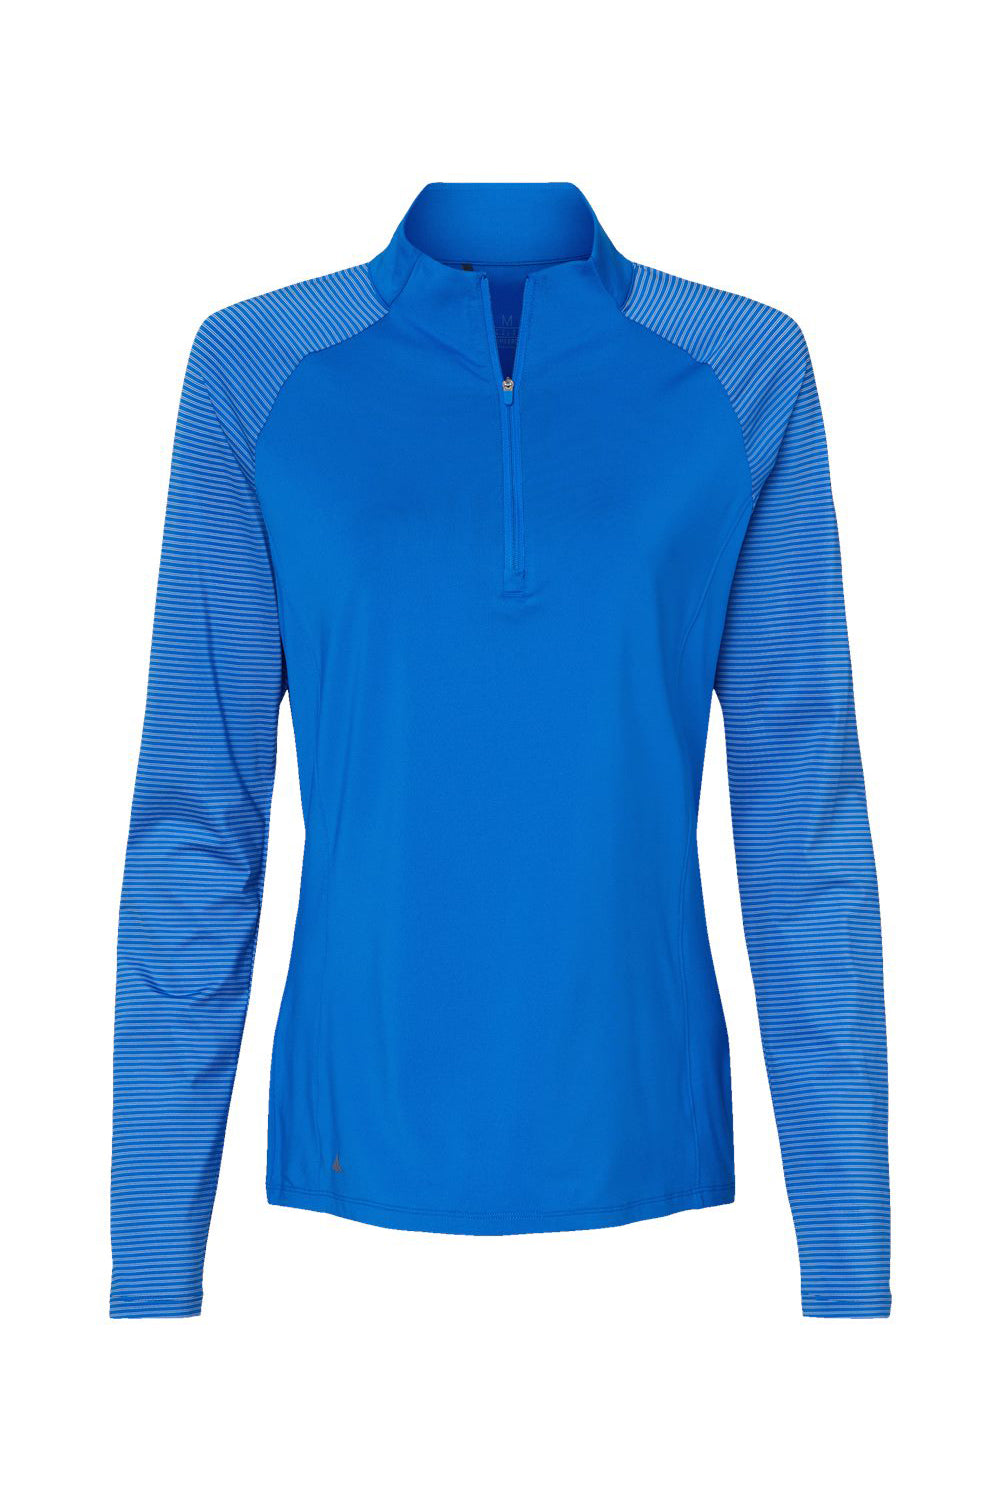 Adidas A521 Womens Stripe Block 1/4 Zip Pullover Glory Blue Flat Front